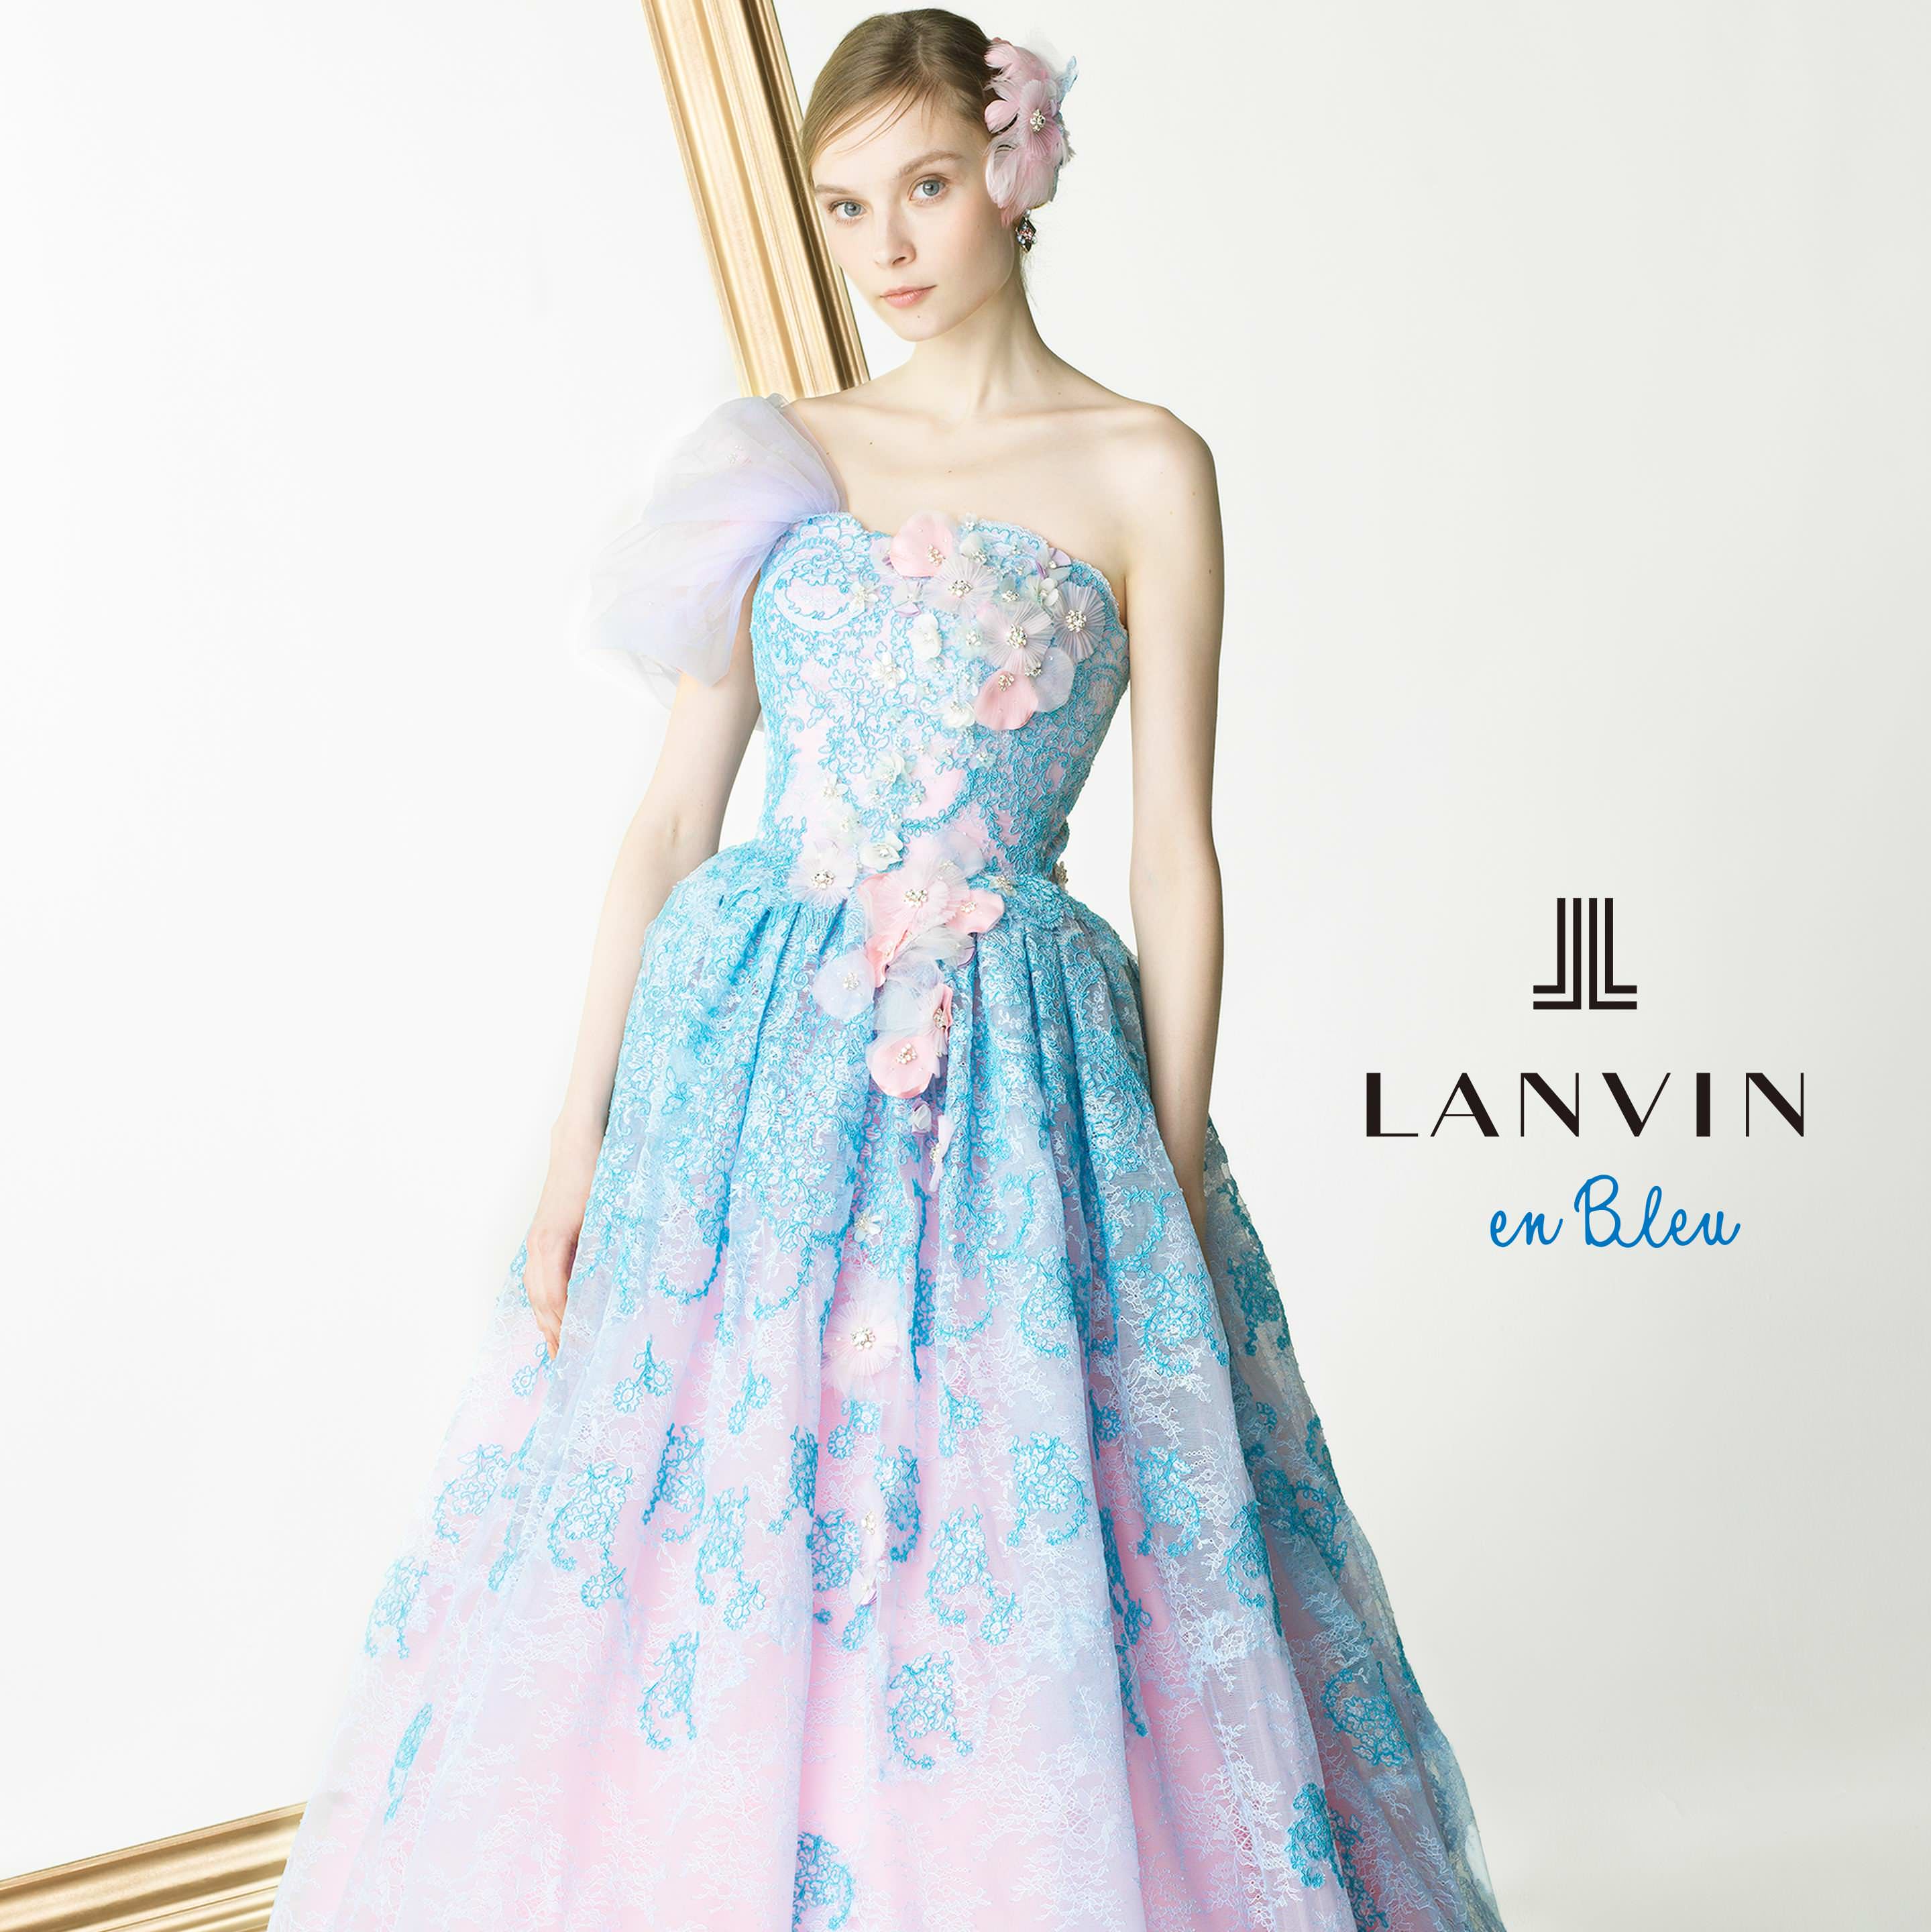 LANVIN en Blueライトブルー×ピンク LB/32659 【結婚式 カラードレス